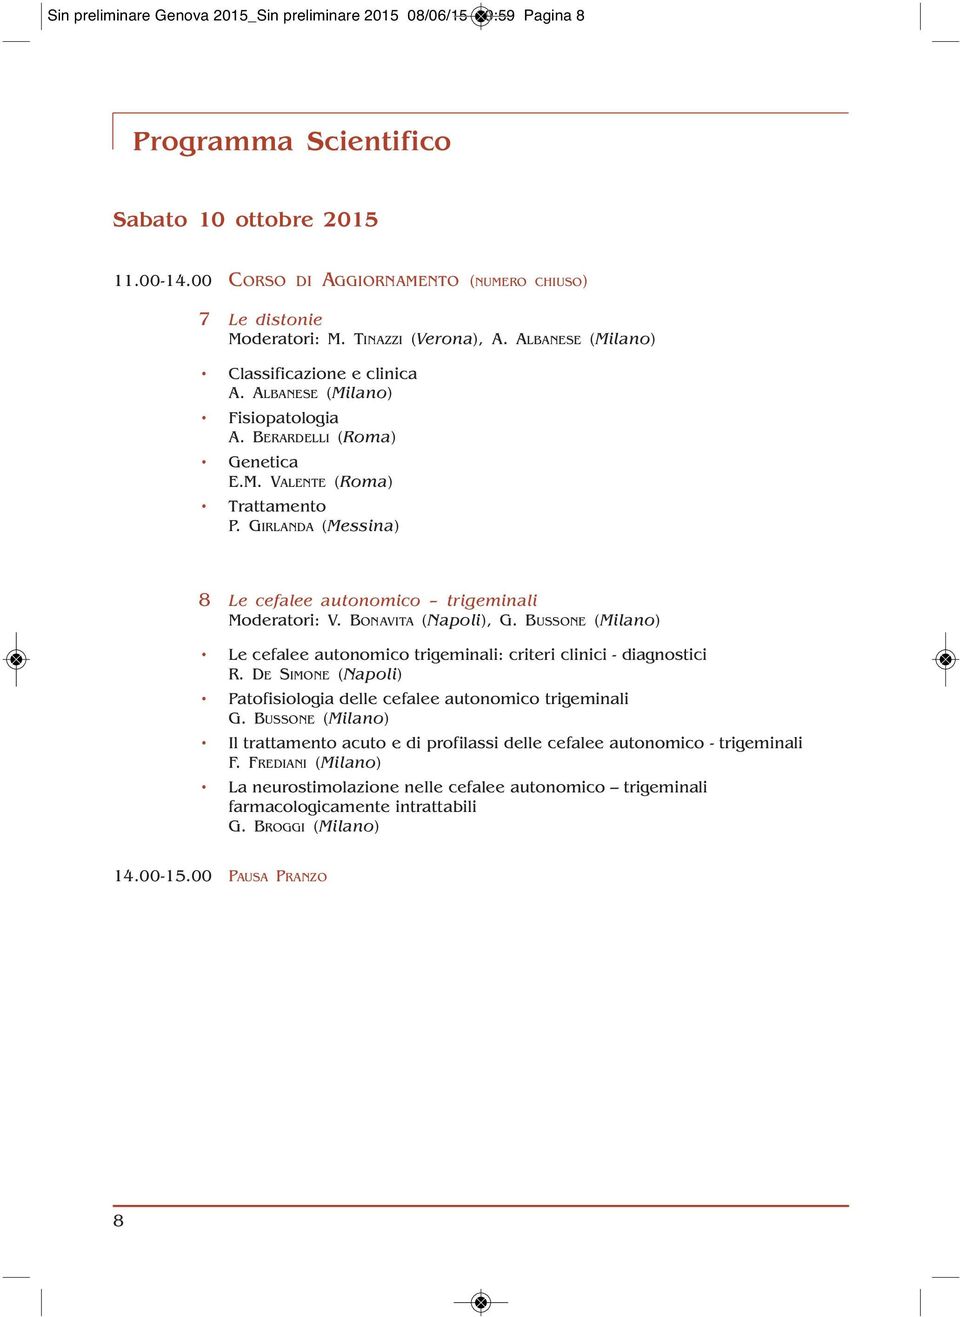 GIRLANDA (Messina) 10.30-ffffff8 Le cefalee autonomico trigeminali Moderatori: V. BONAVITA (Napoli), G. BUSSONE (Milano) Le cefalee autonomico trigeminali: criteri clinici - diagnostici R.